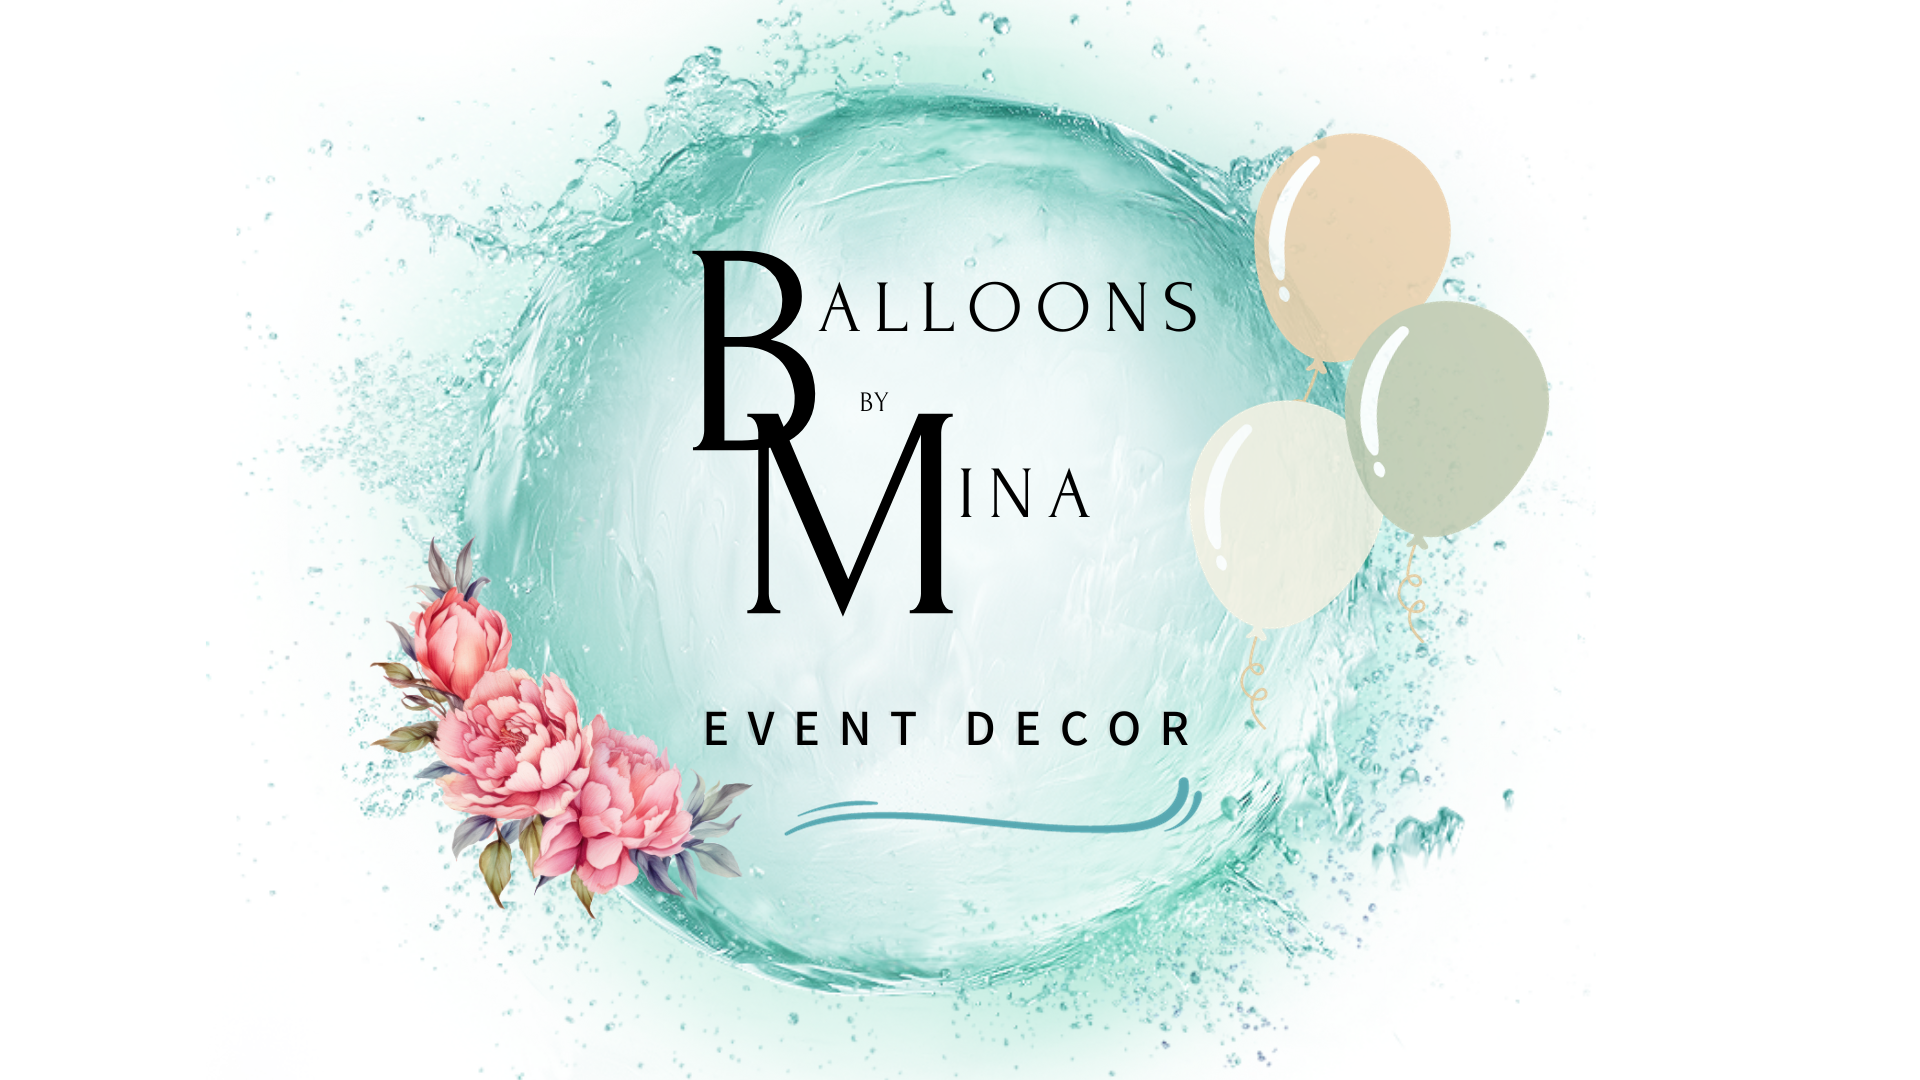 Balloons by Mina & Event Decor